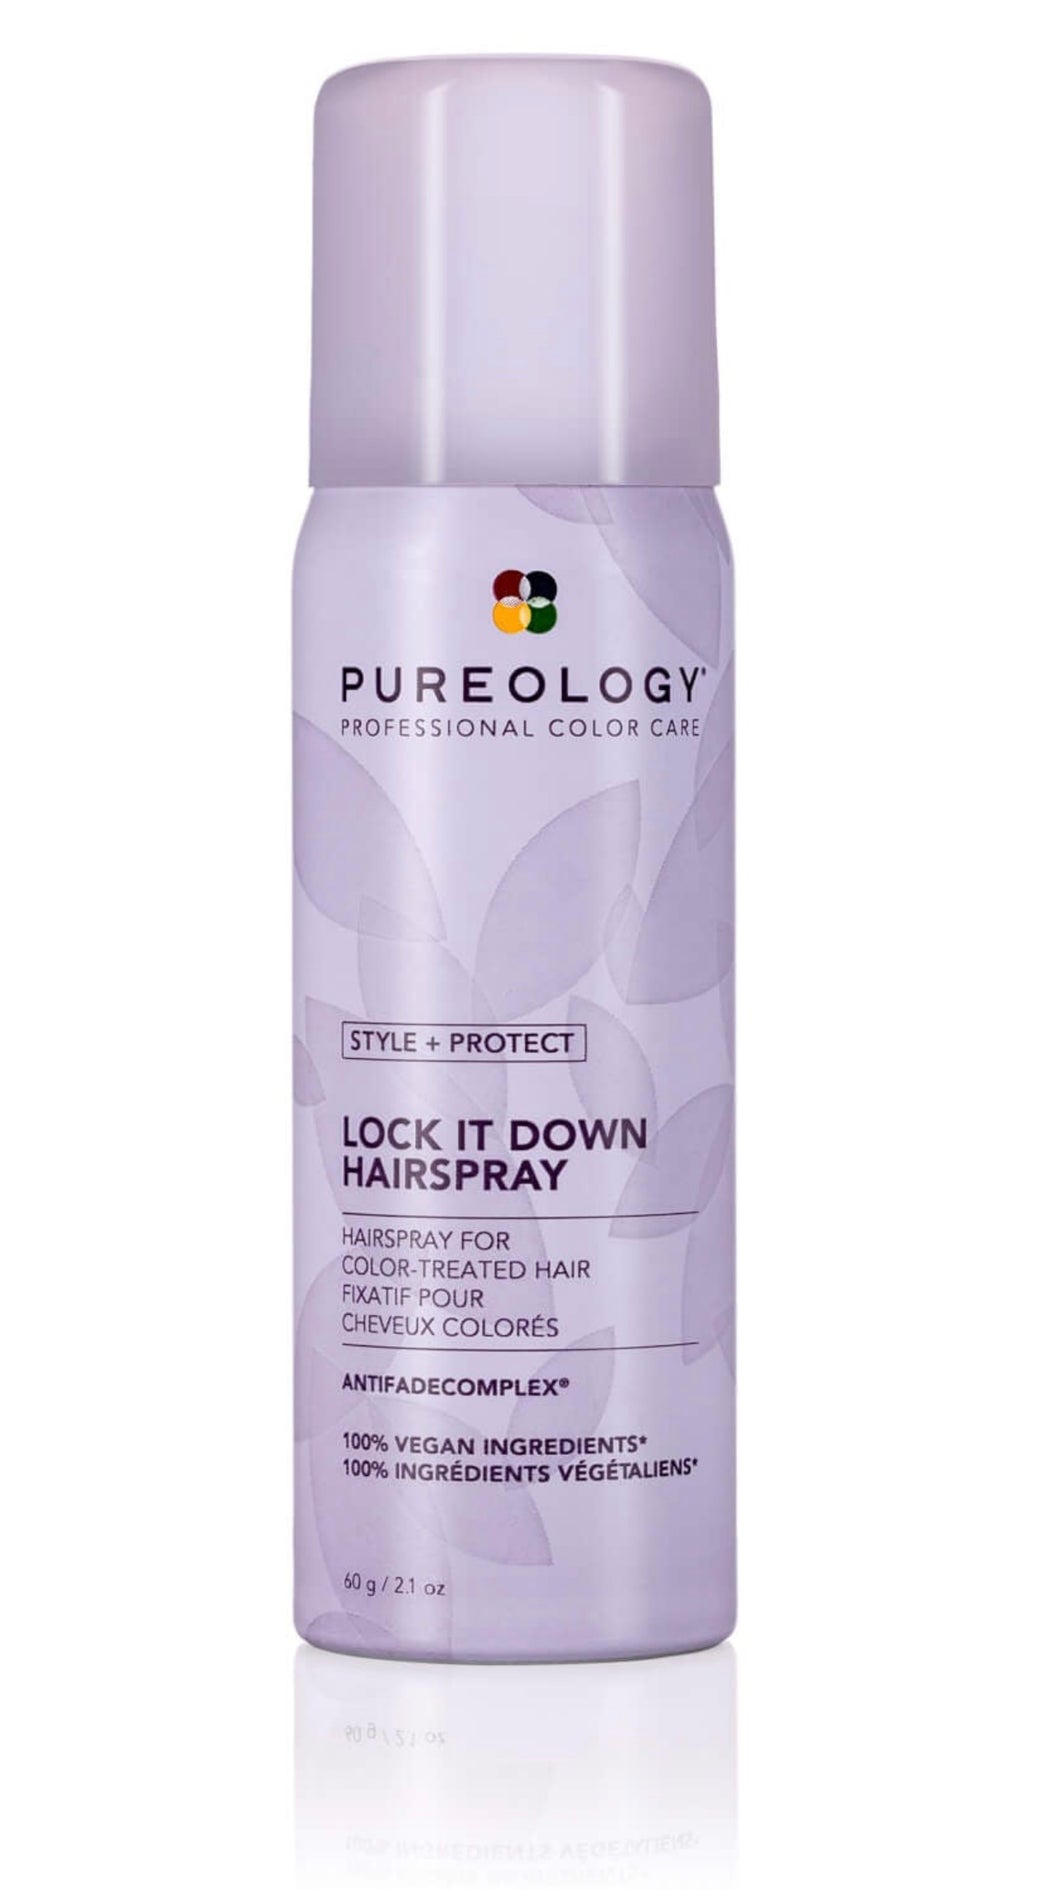 Pureology Lock It Down Hairspray Travel Size